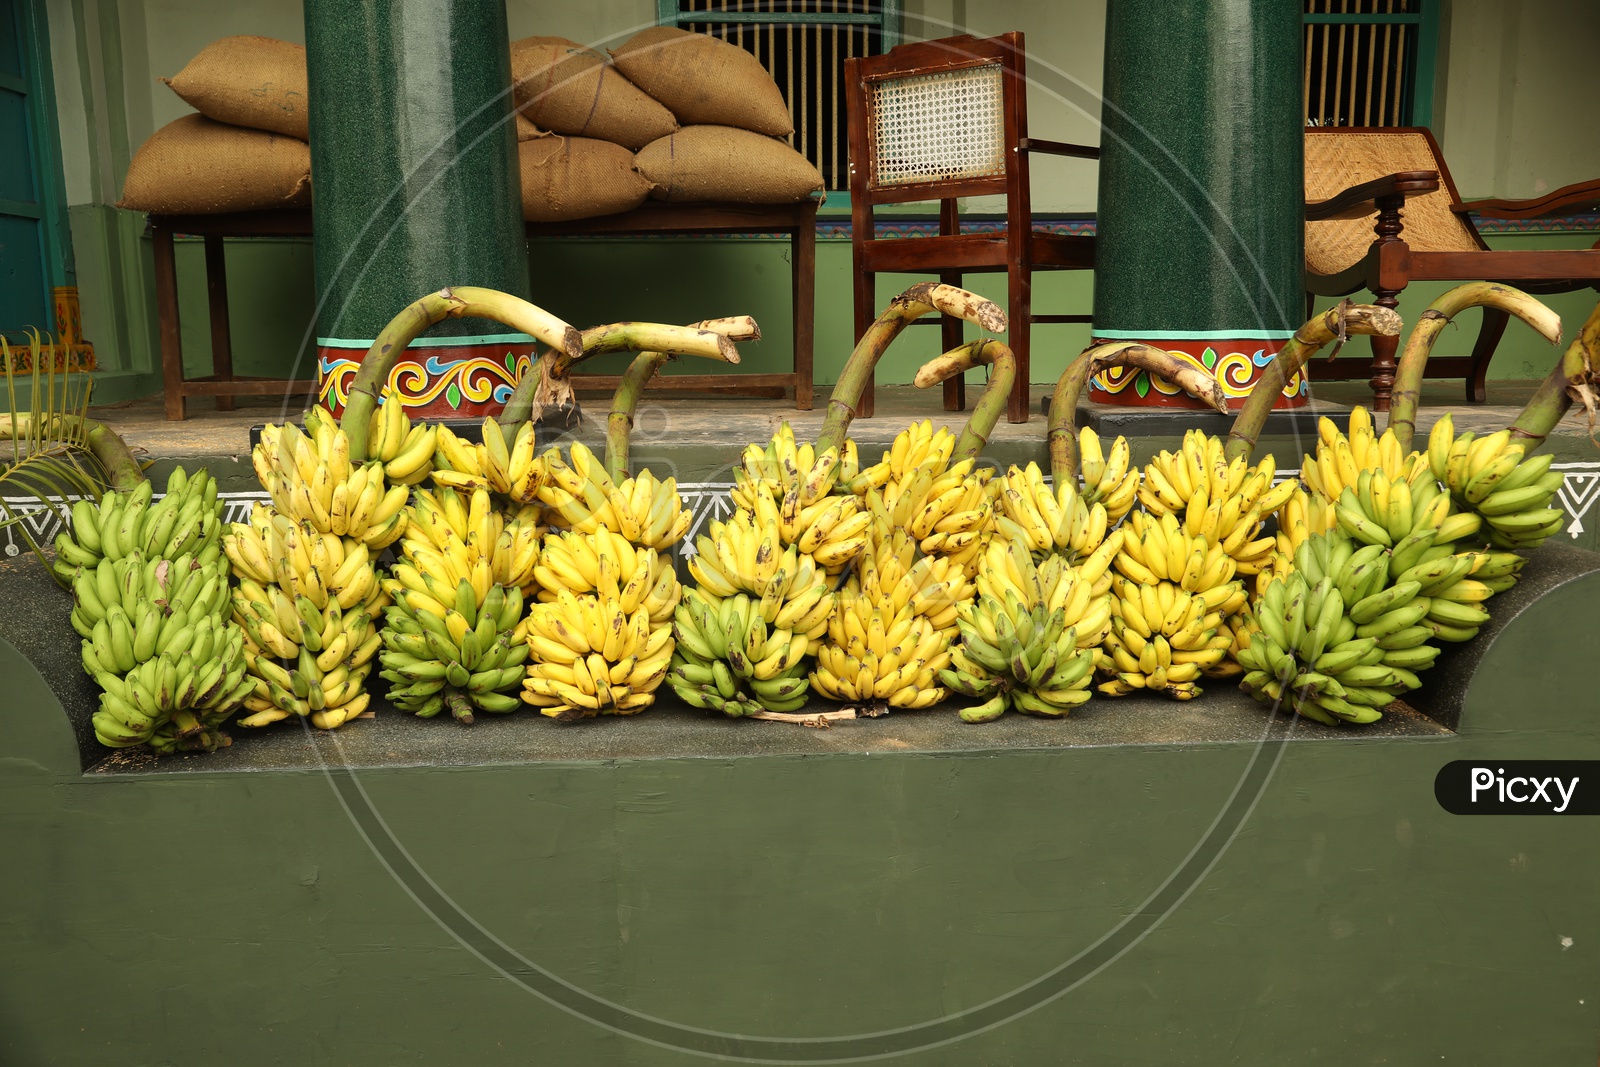 Bunches of bananas at Village house